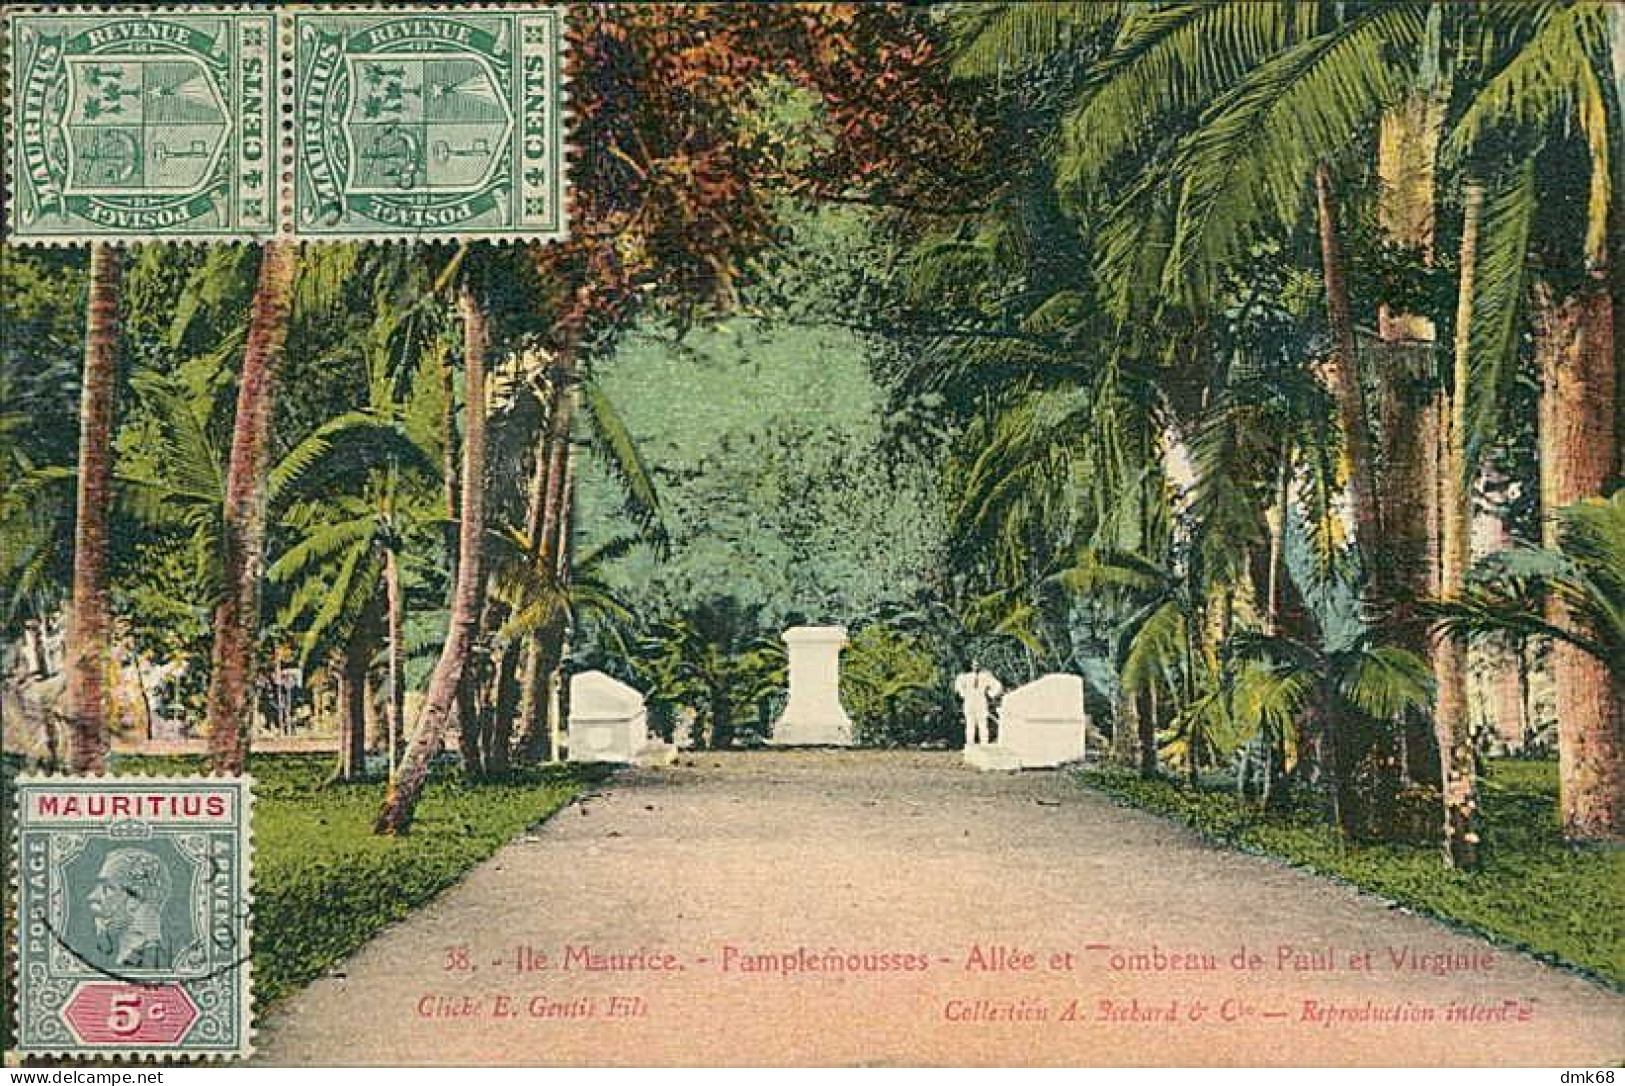 AFRICA - MAURITIUS / ILE MAURICE - PAMPLEMOUSSES - ALLEE ET TOMBEAUX DE PAUL ET VIRGINIE - MAILED 1924 / STAMPS (12576) - Mauritius